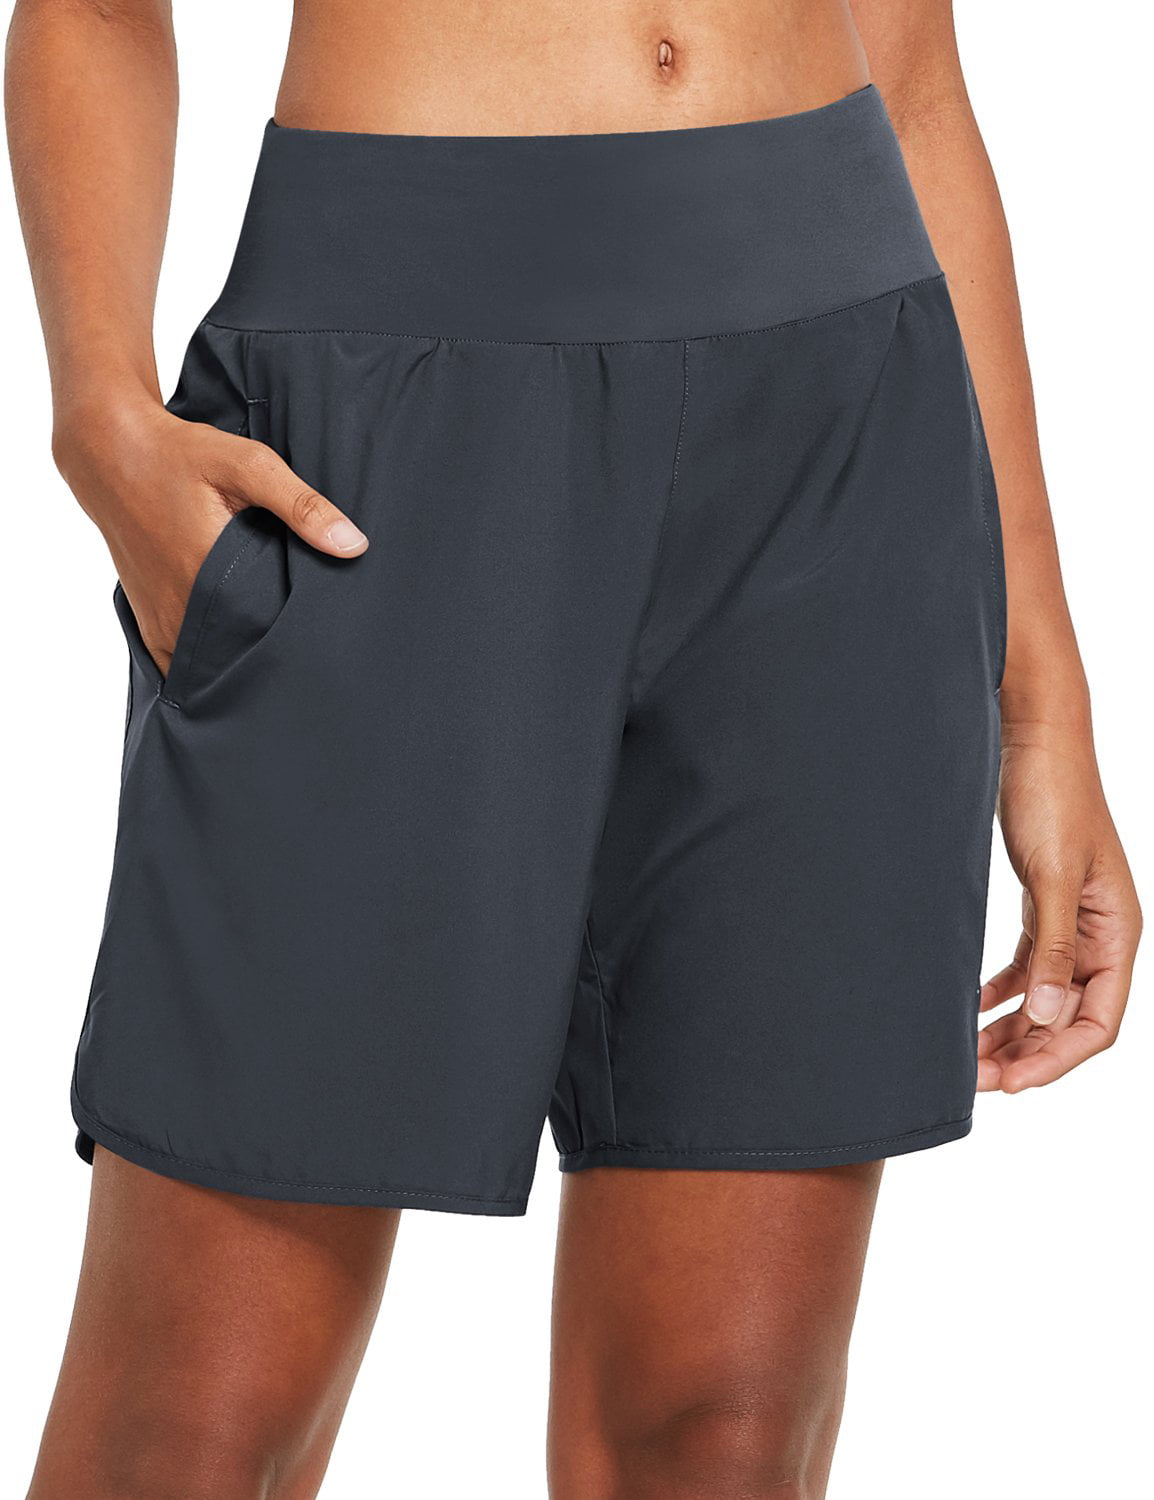 BALEAF Women/'s 7 Athletic Long Running Shorts Zipper Pocket Drawstring Lounge Sport Gym